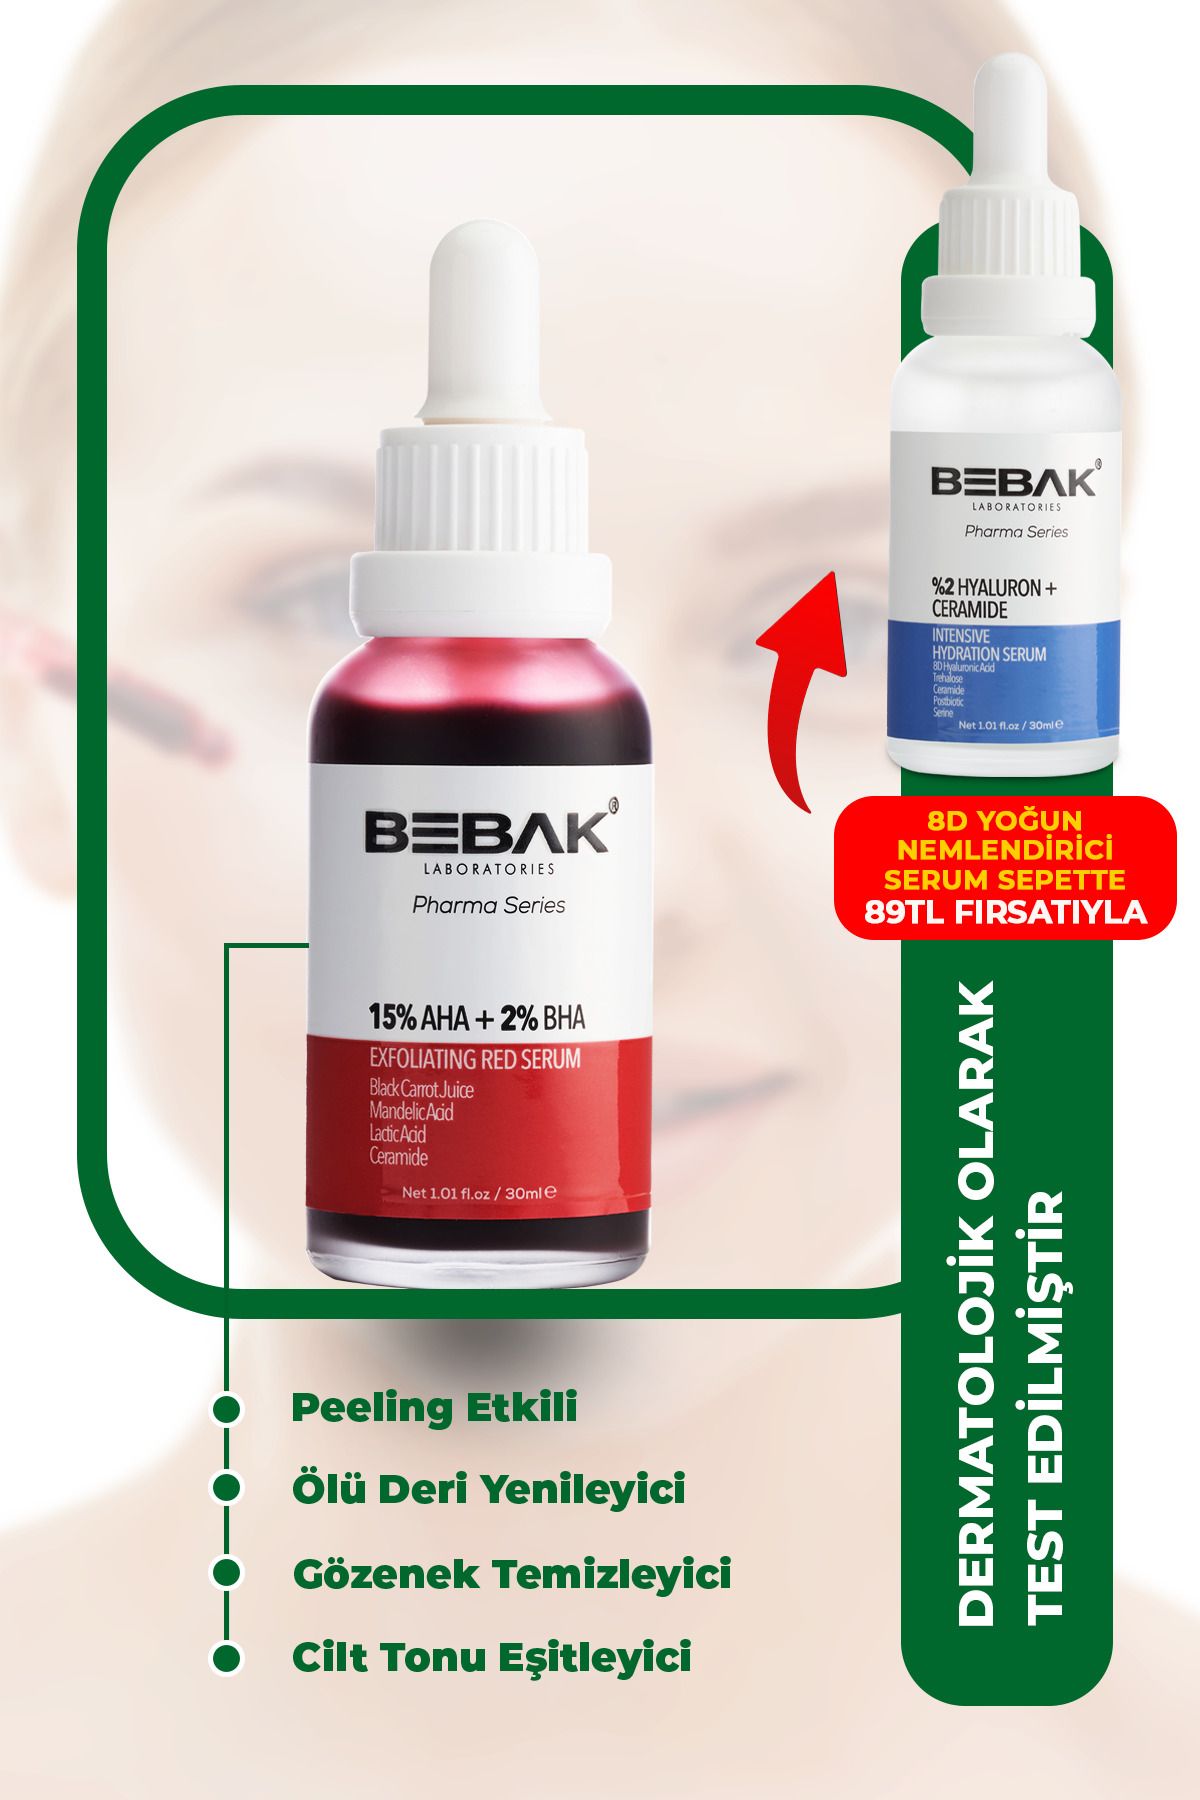 Bebak Pharma %15 AHA+%2 BHA Cilt Tonu Eşitleyici Kırmızı Peeling Serum Exfoliating Red Serum 30ml